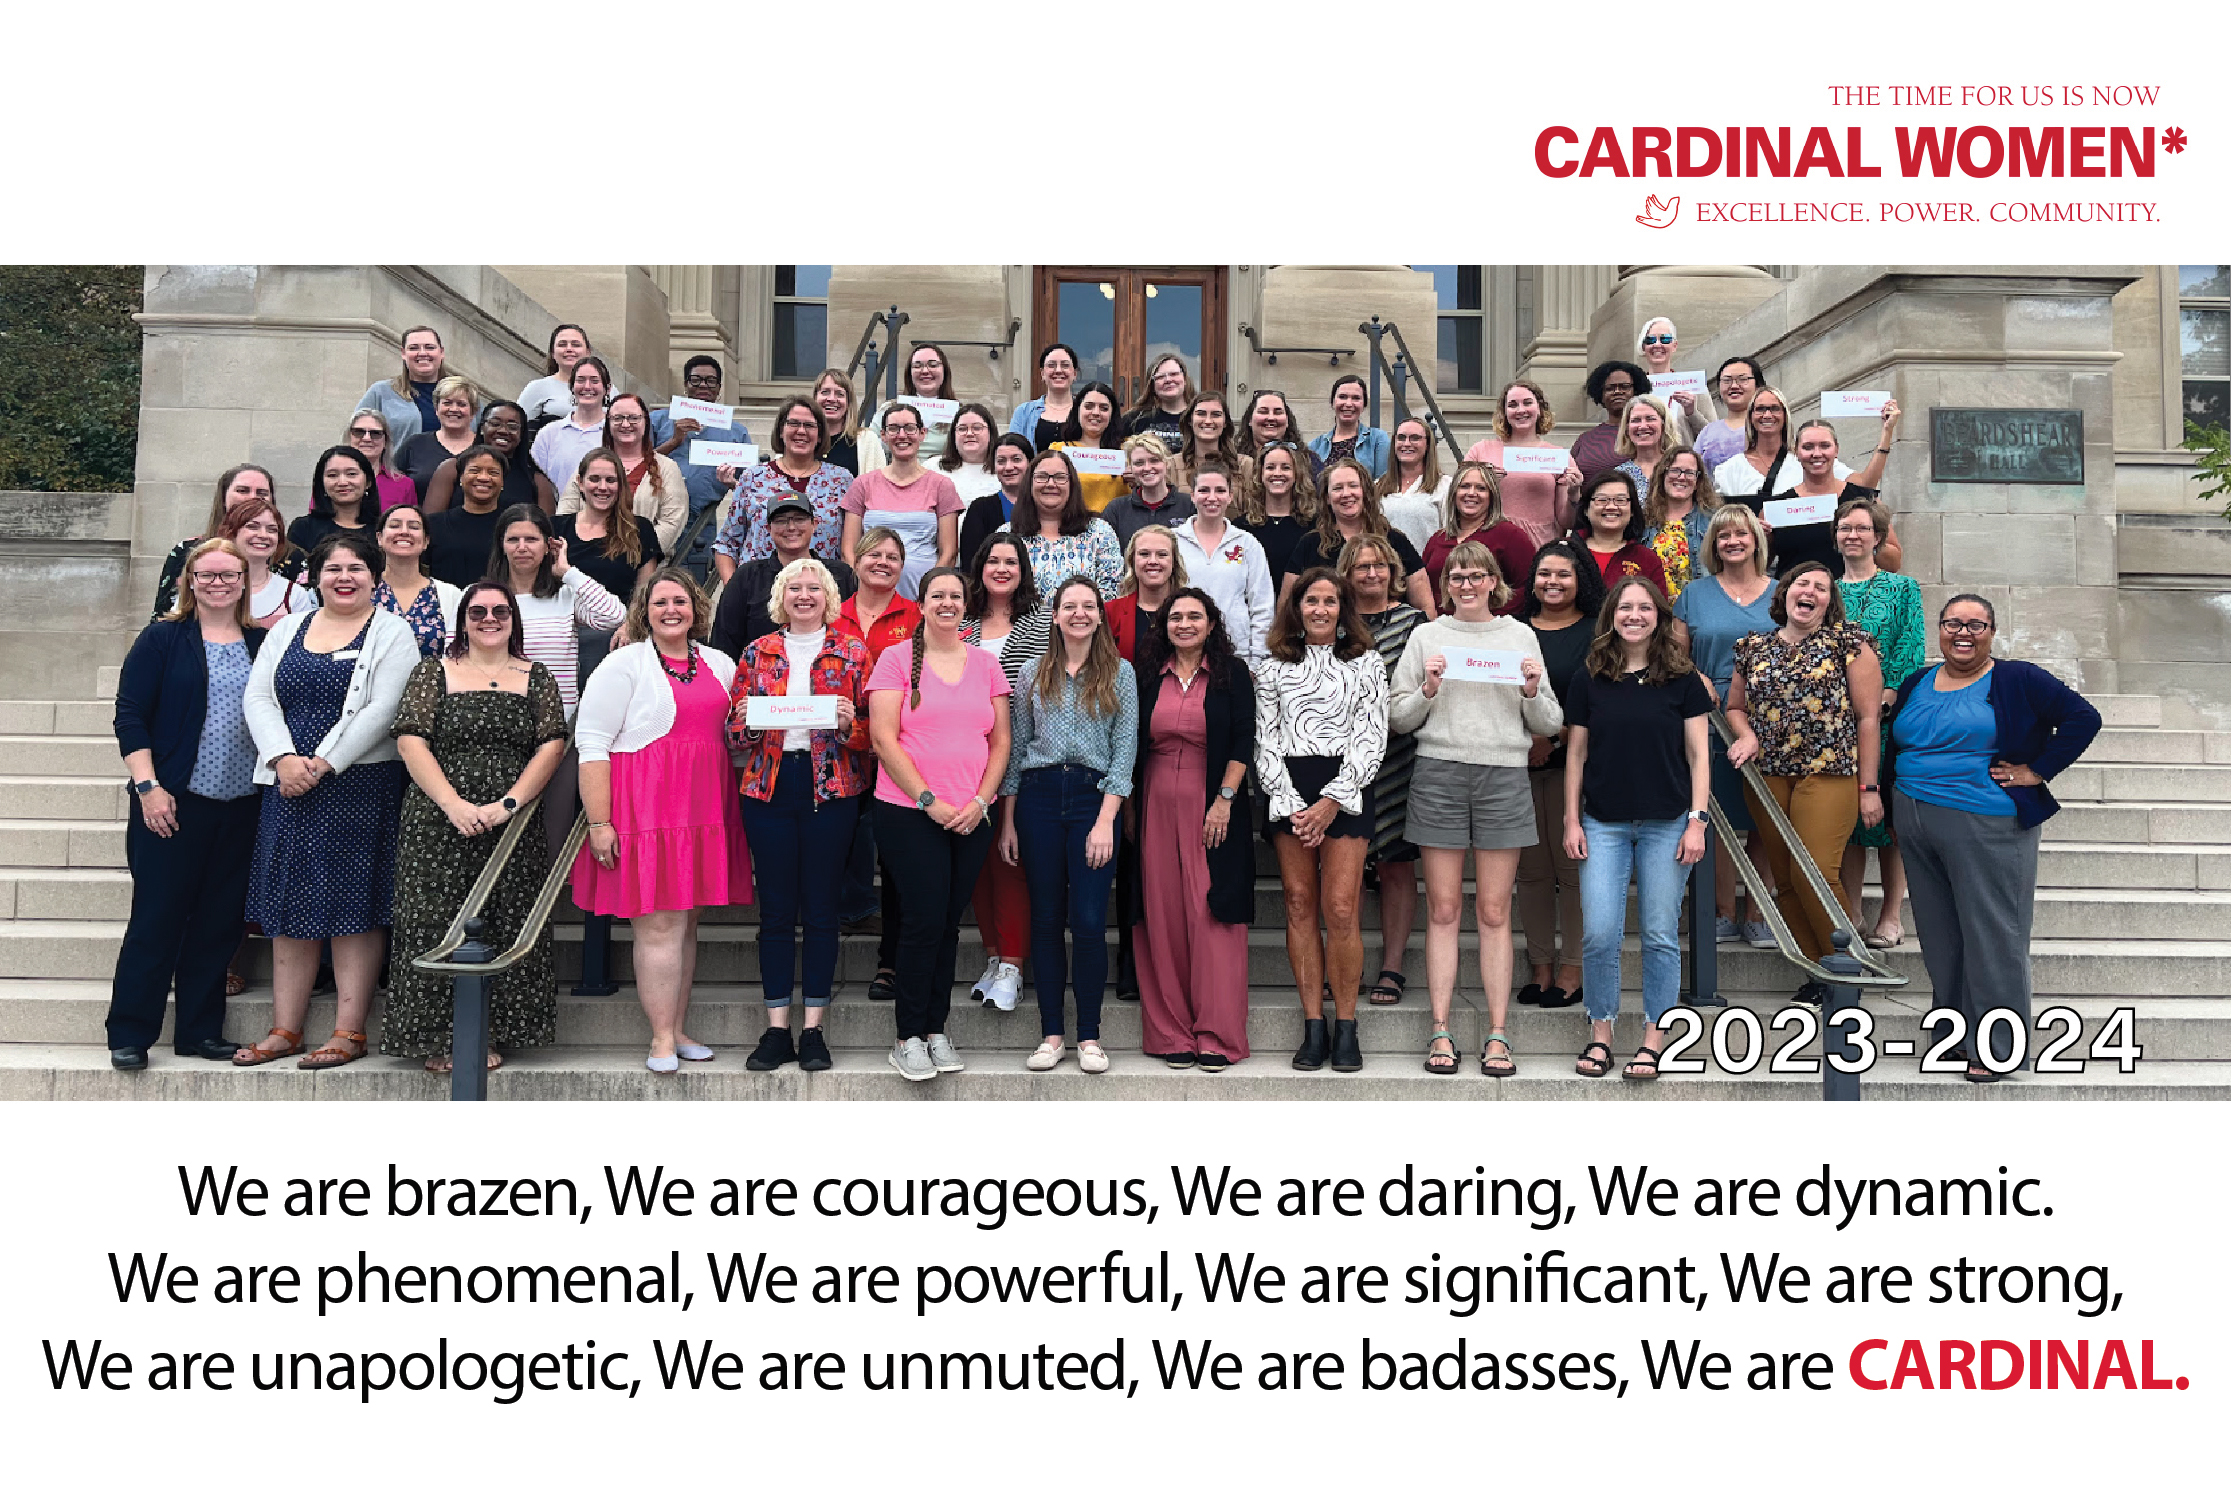 Group photo of Cardinal Women* Cohort on the steps of Beardshear Hall.